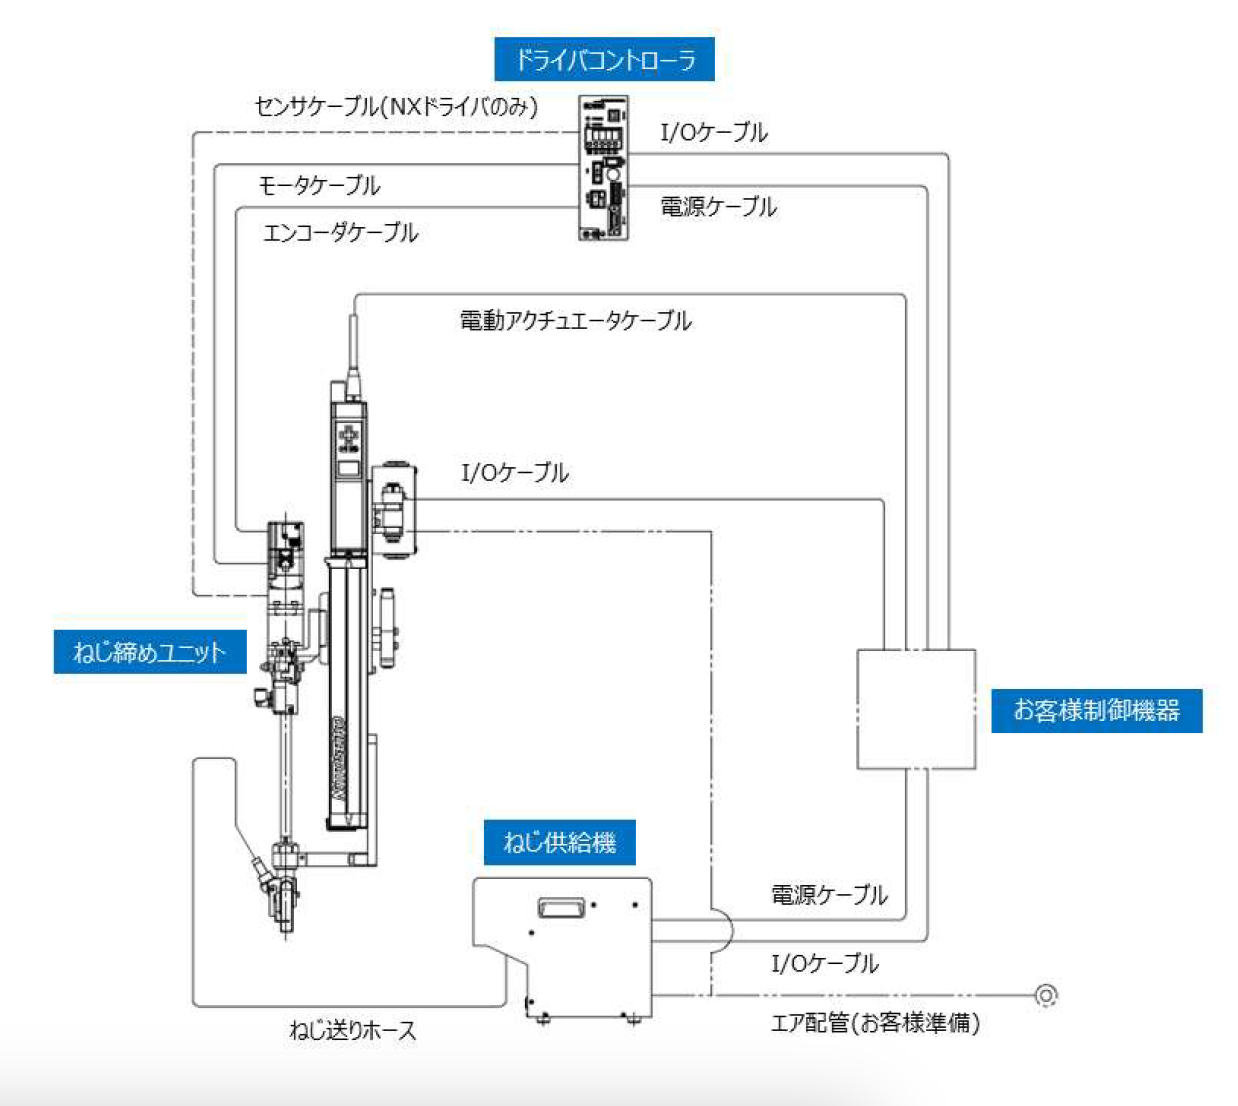 Device configuration diagram 2023-09-15 17.12.48.png